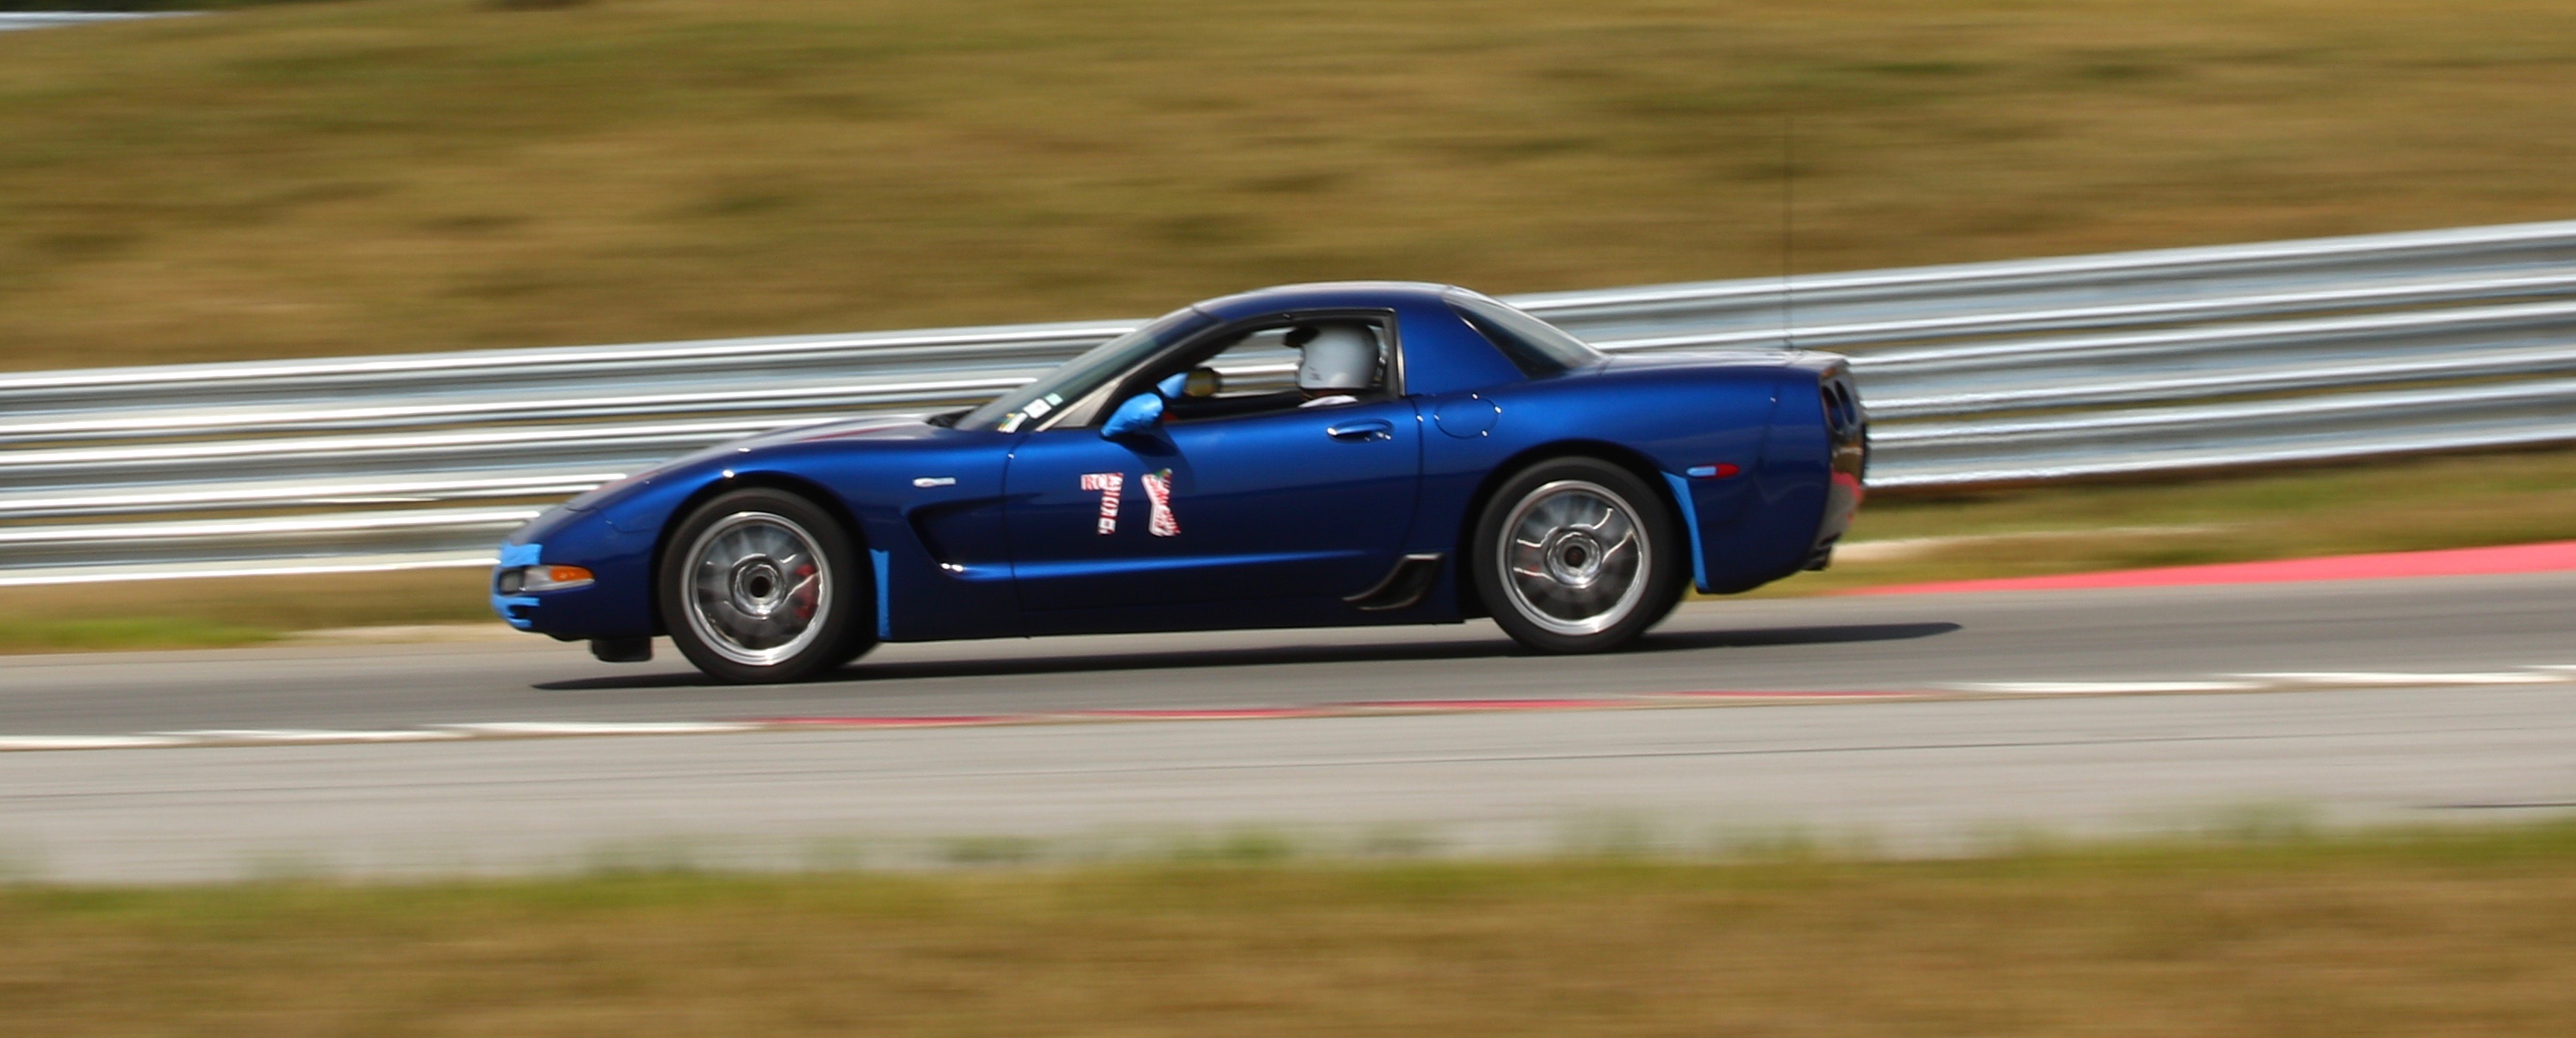 Corvette race track, Corvette museum’s motorsports park offers race track intro, ClassicCars.com Journal